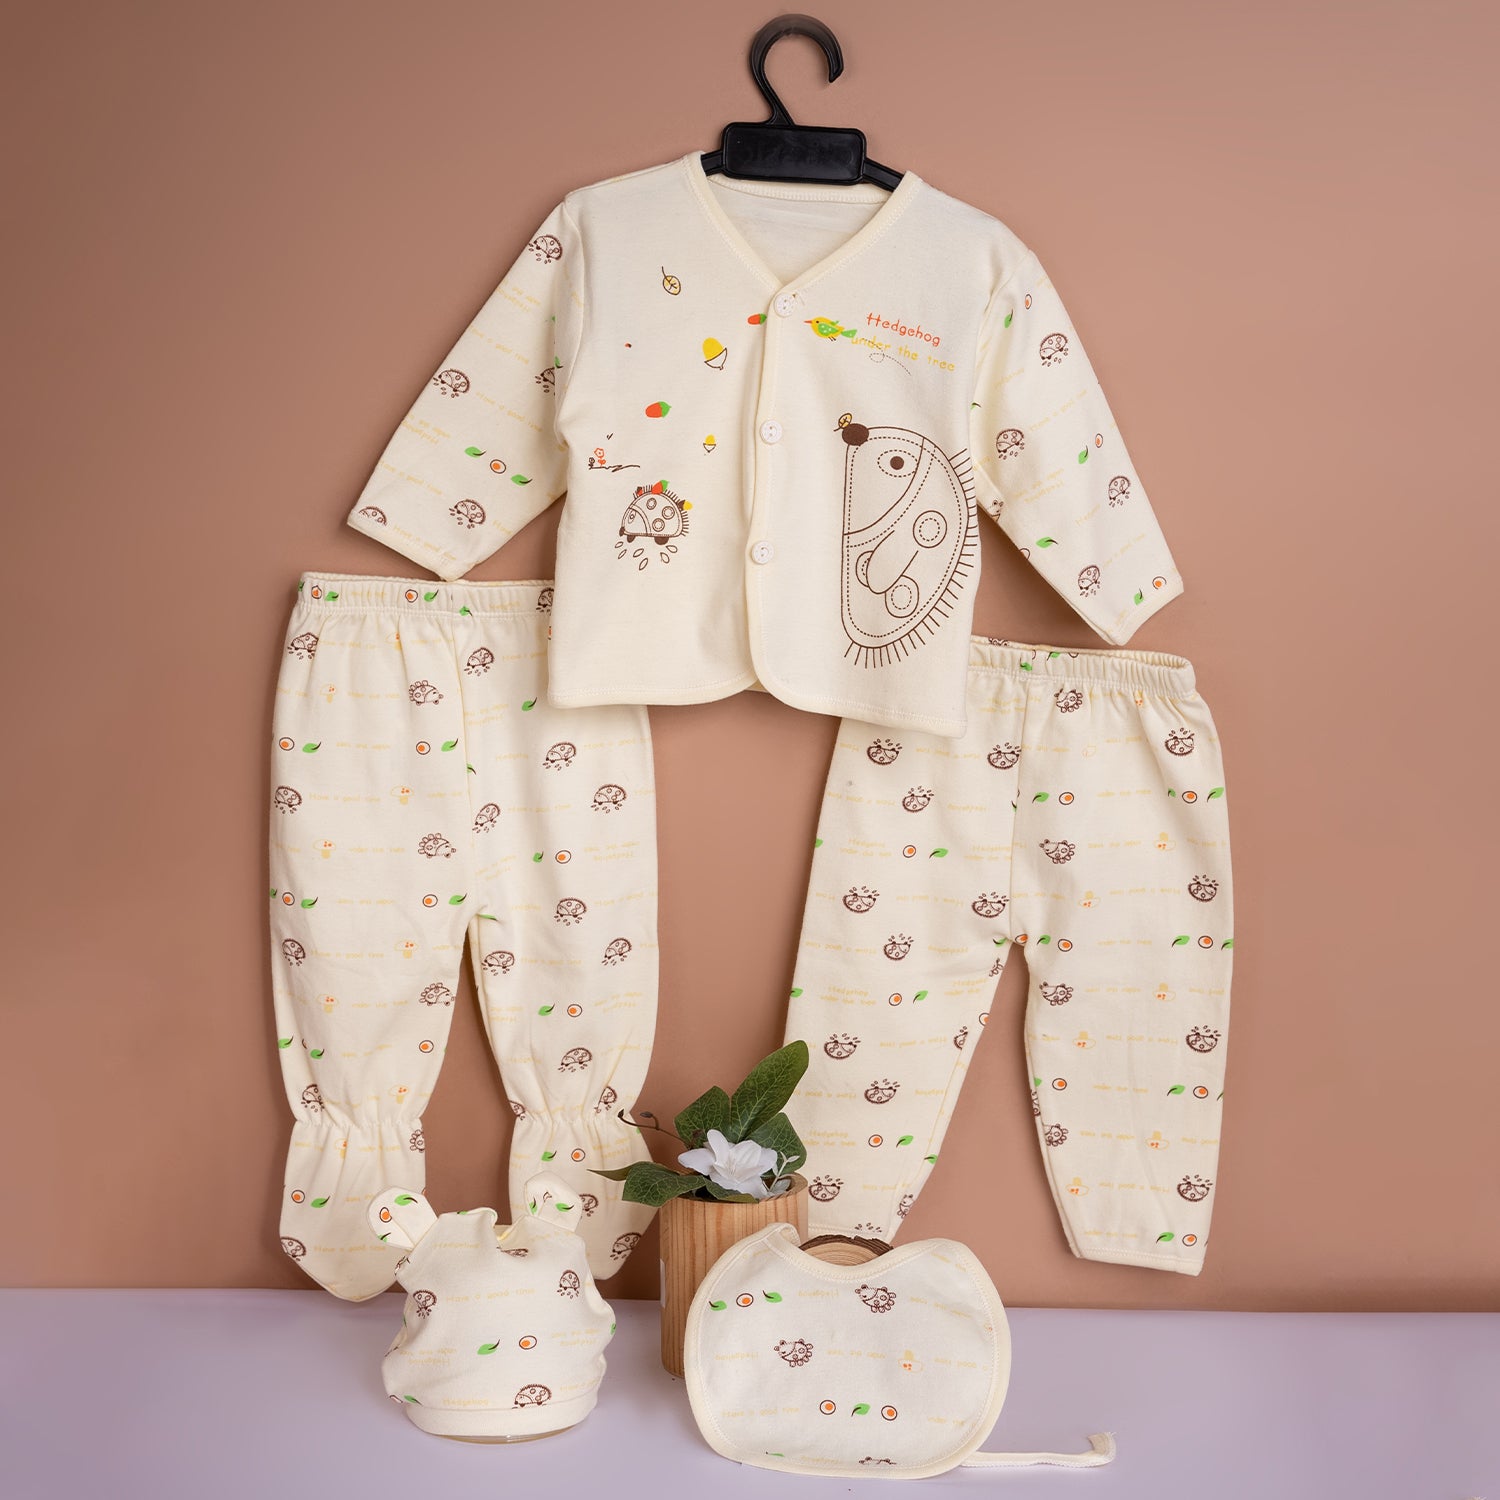 Baby Moo Hedgehog Print Cap Bib Pyjamas 5 Pcs Clothing Gift Set - Yellow